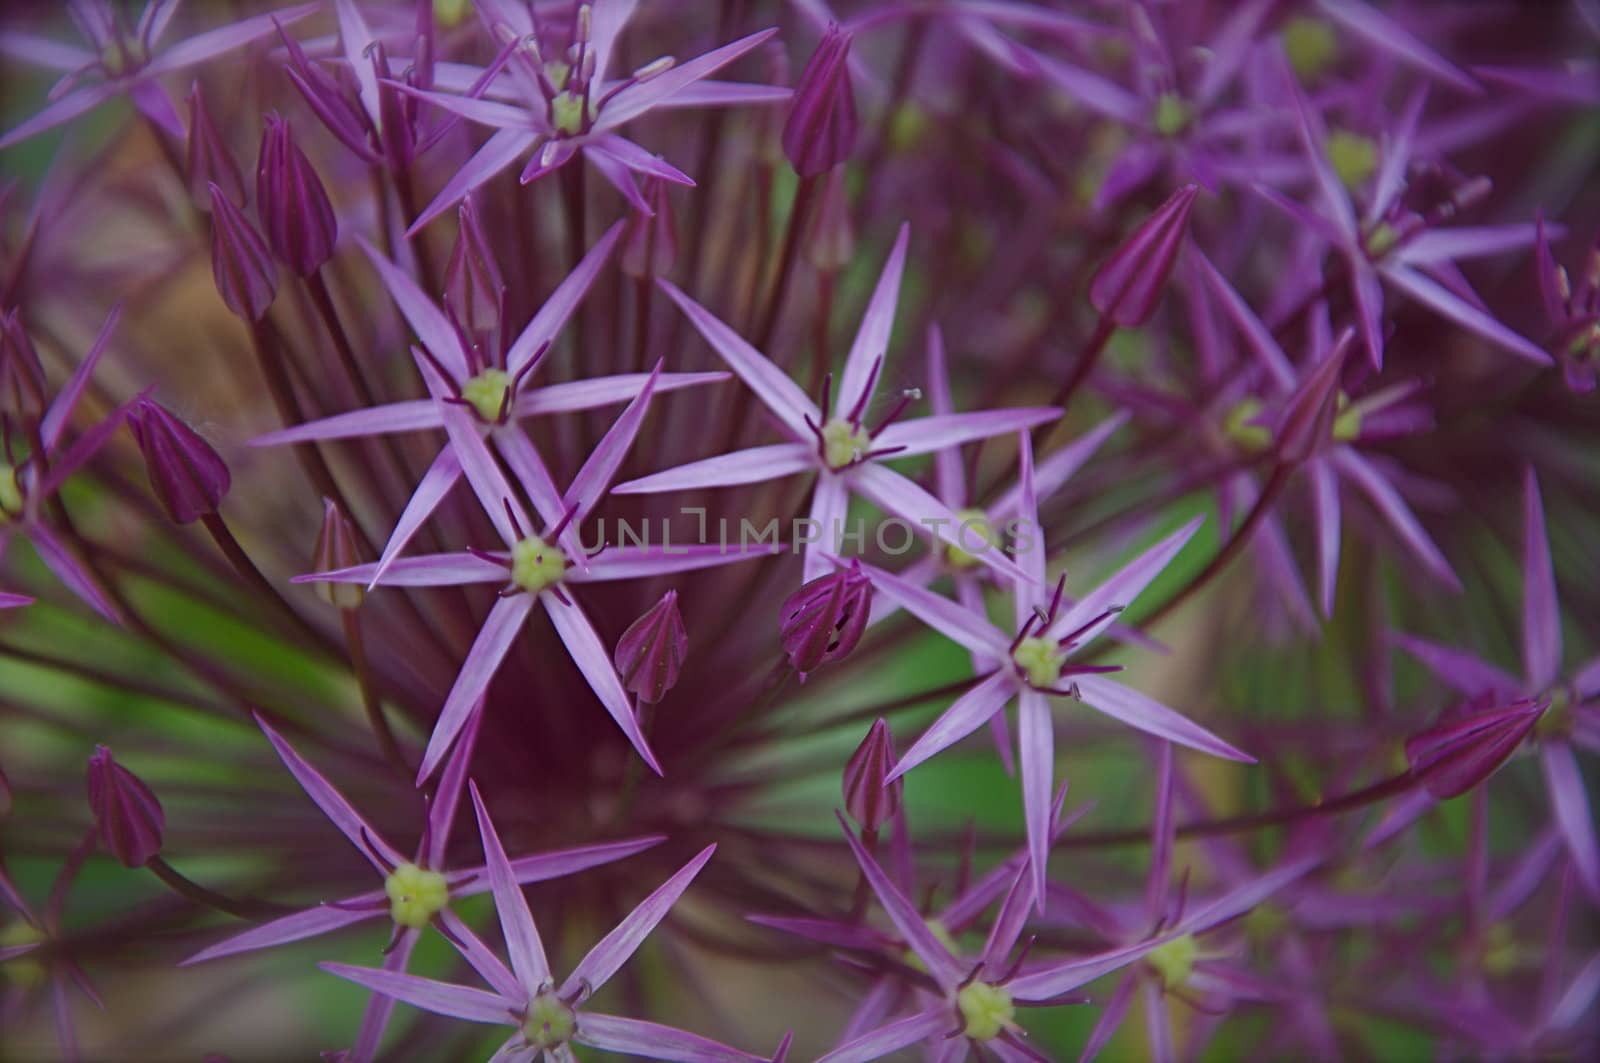 Purple Onion Flower Blossom by gilmourbto2001